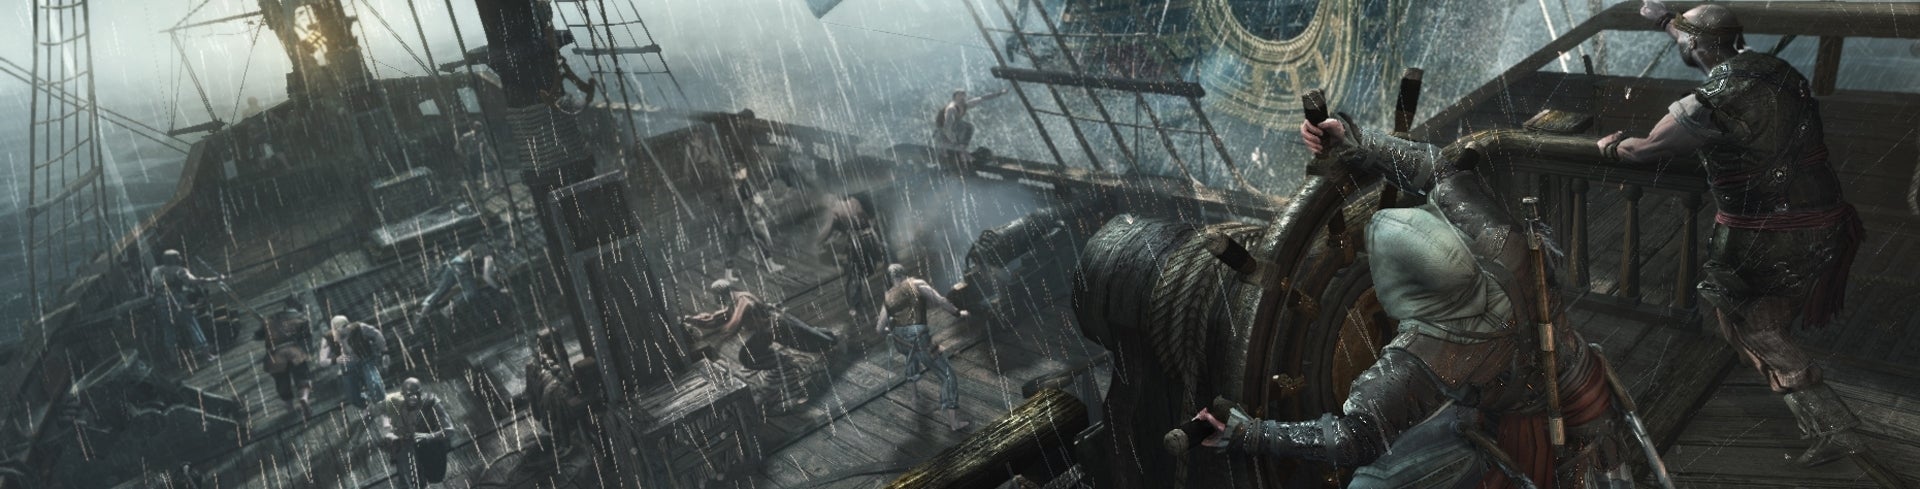 Image for Assassin's Creed 4 Black Flag - Legendary Ship tactics